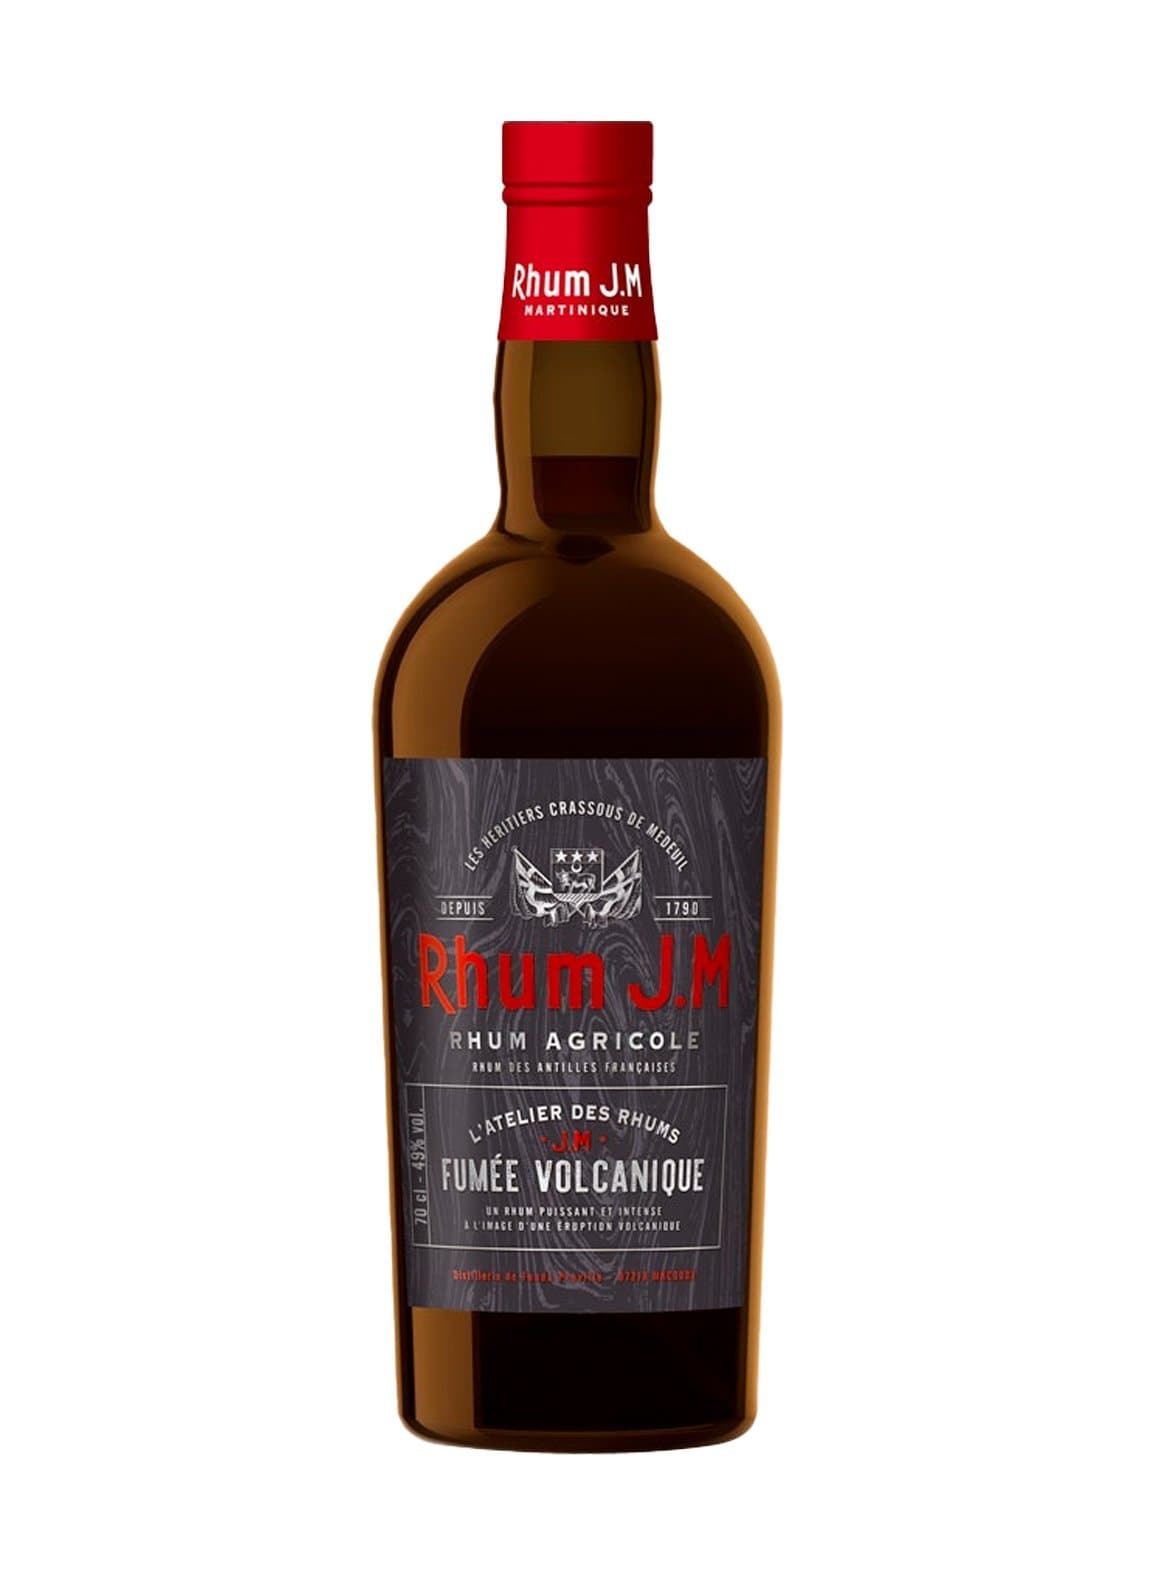 J.M Rhum Agricole FumŽe Volcanique 49% 700ml | Rum | Shop online at Spirits of France